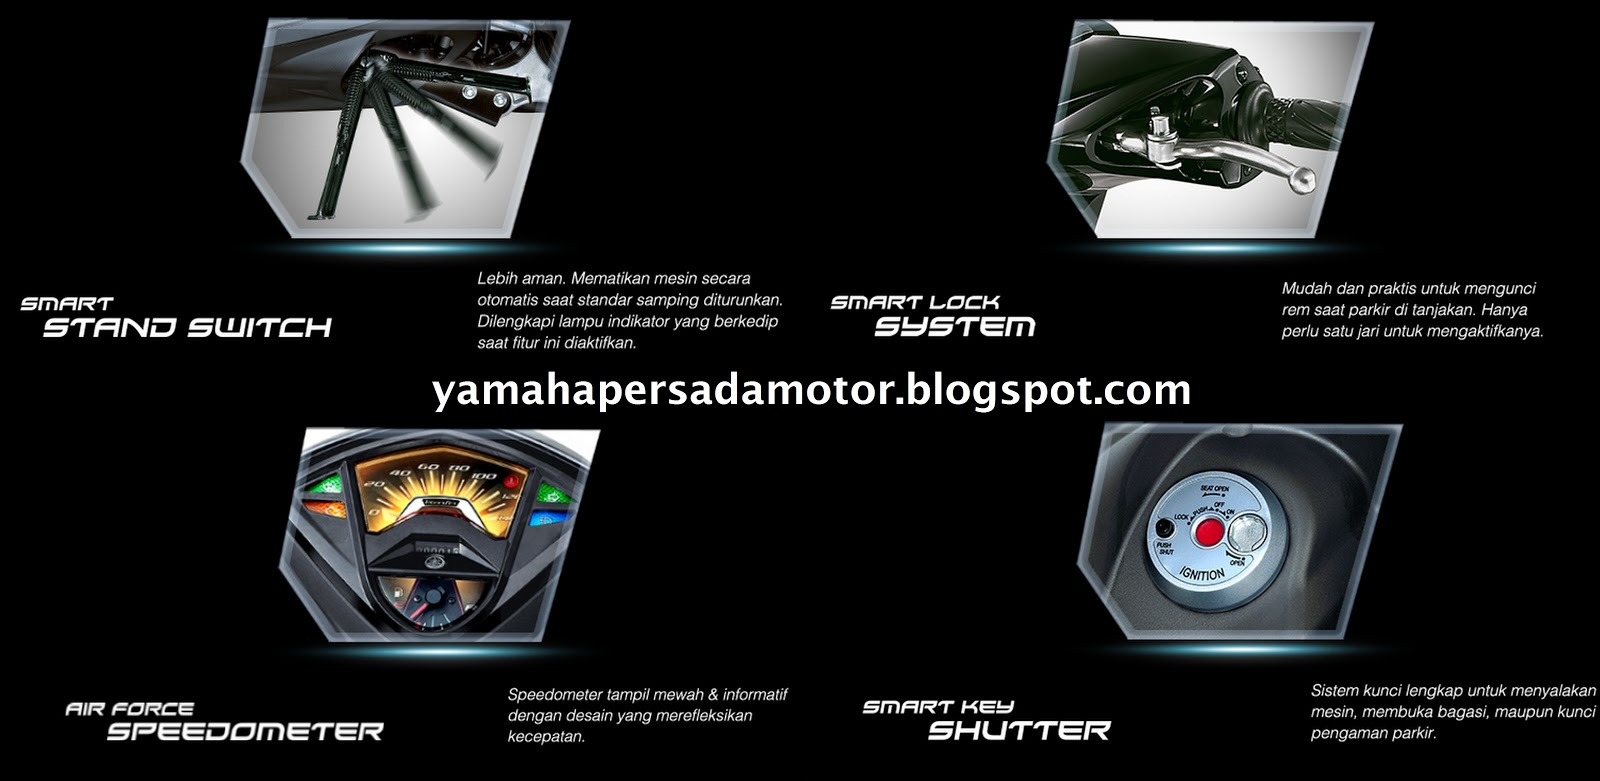 Yamaha GT125 Eagle Eye Kredit Motor Yamaha GT125 Kredit Motor